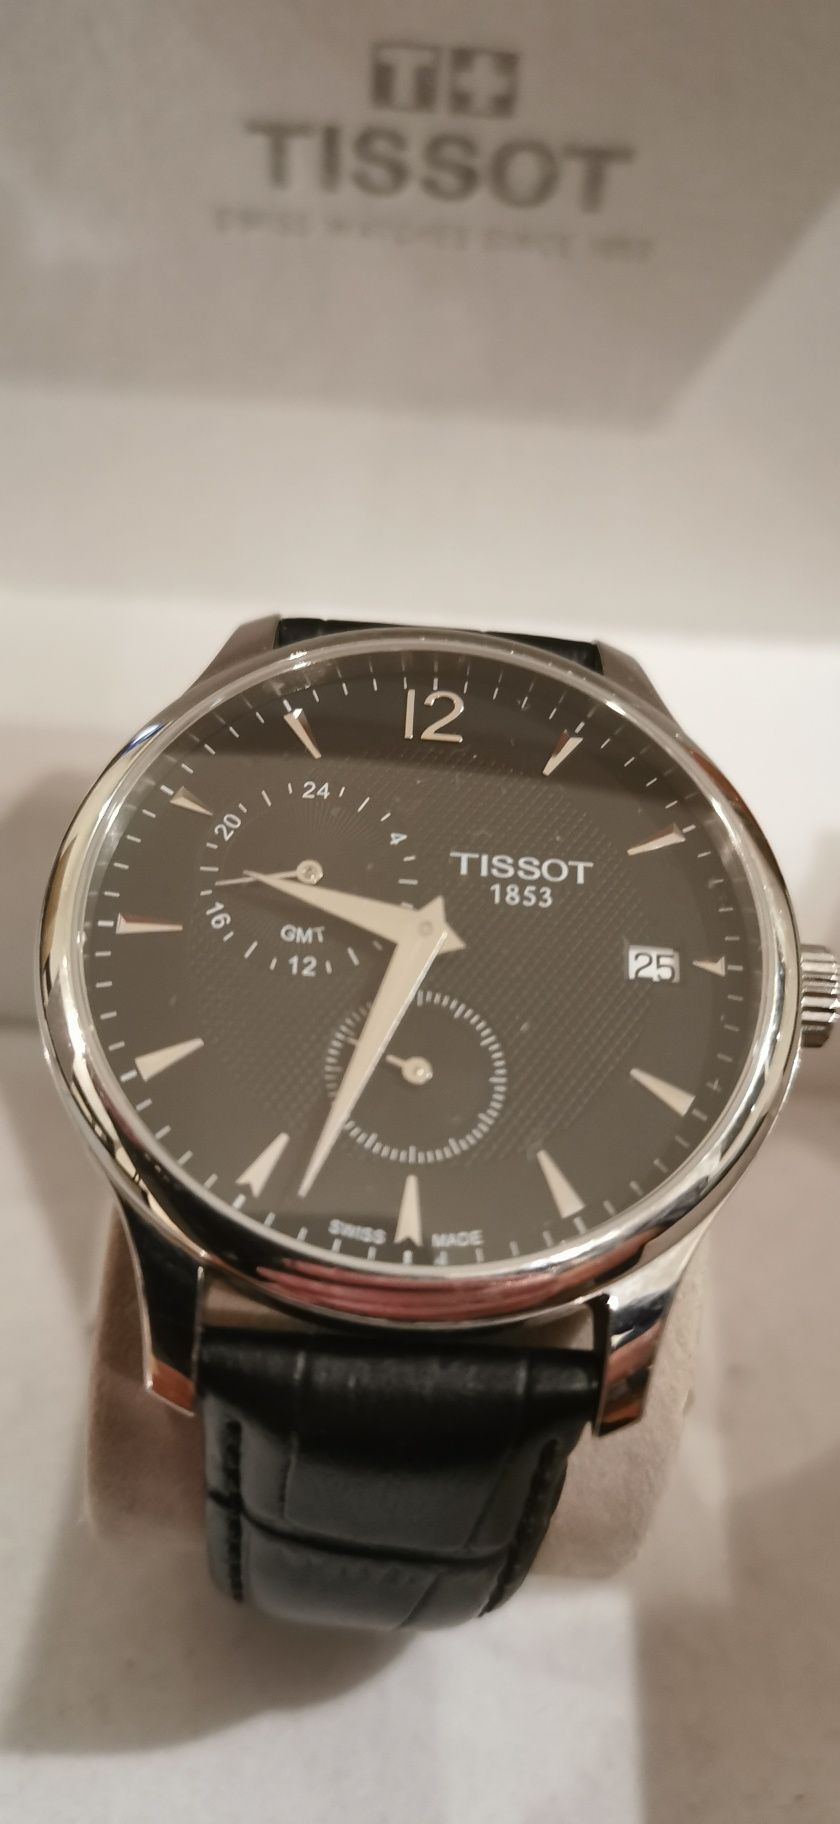 Relógio Tissot Tradition GMT - preto